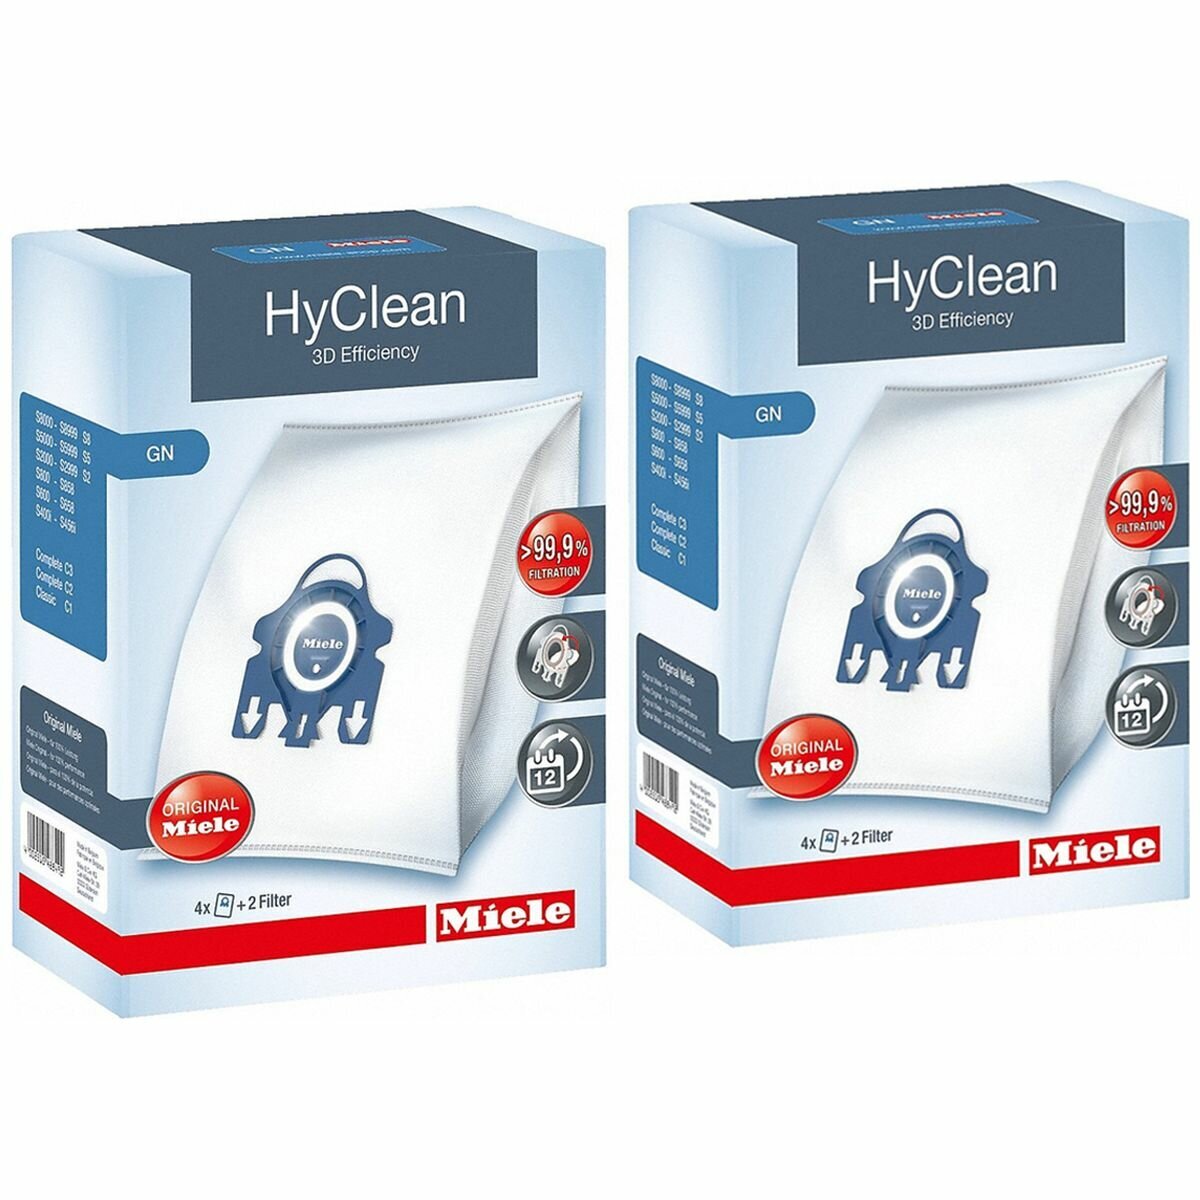 Miele GN HyClean 3D Efficiency Dustbags